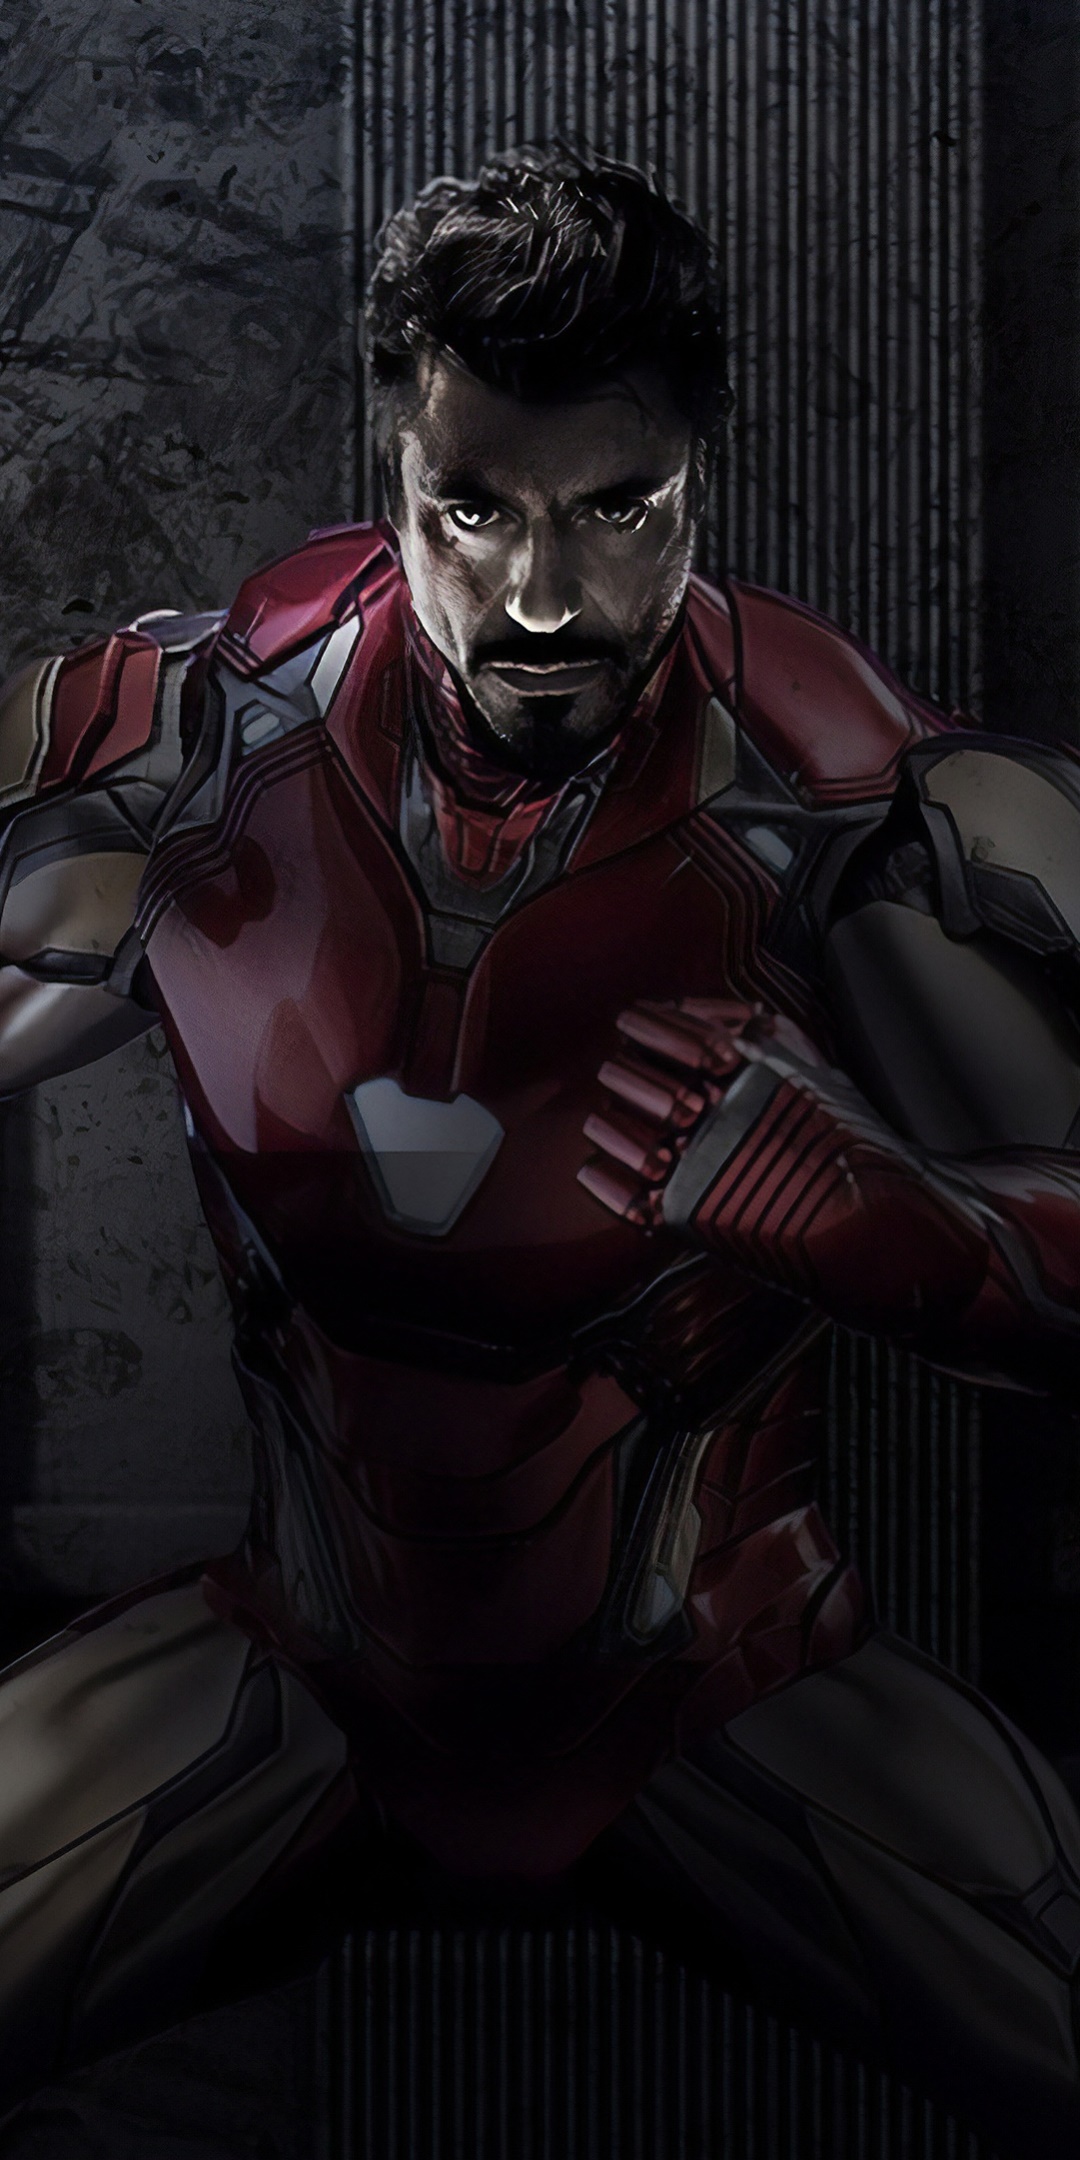 Wallpaper / Movie Avengers Endgame Phone Wallpaper, Iron Man, 1080x2160 free download